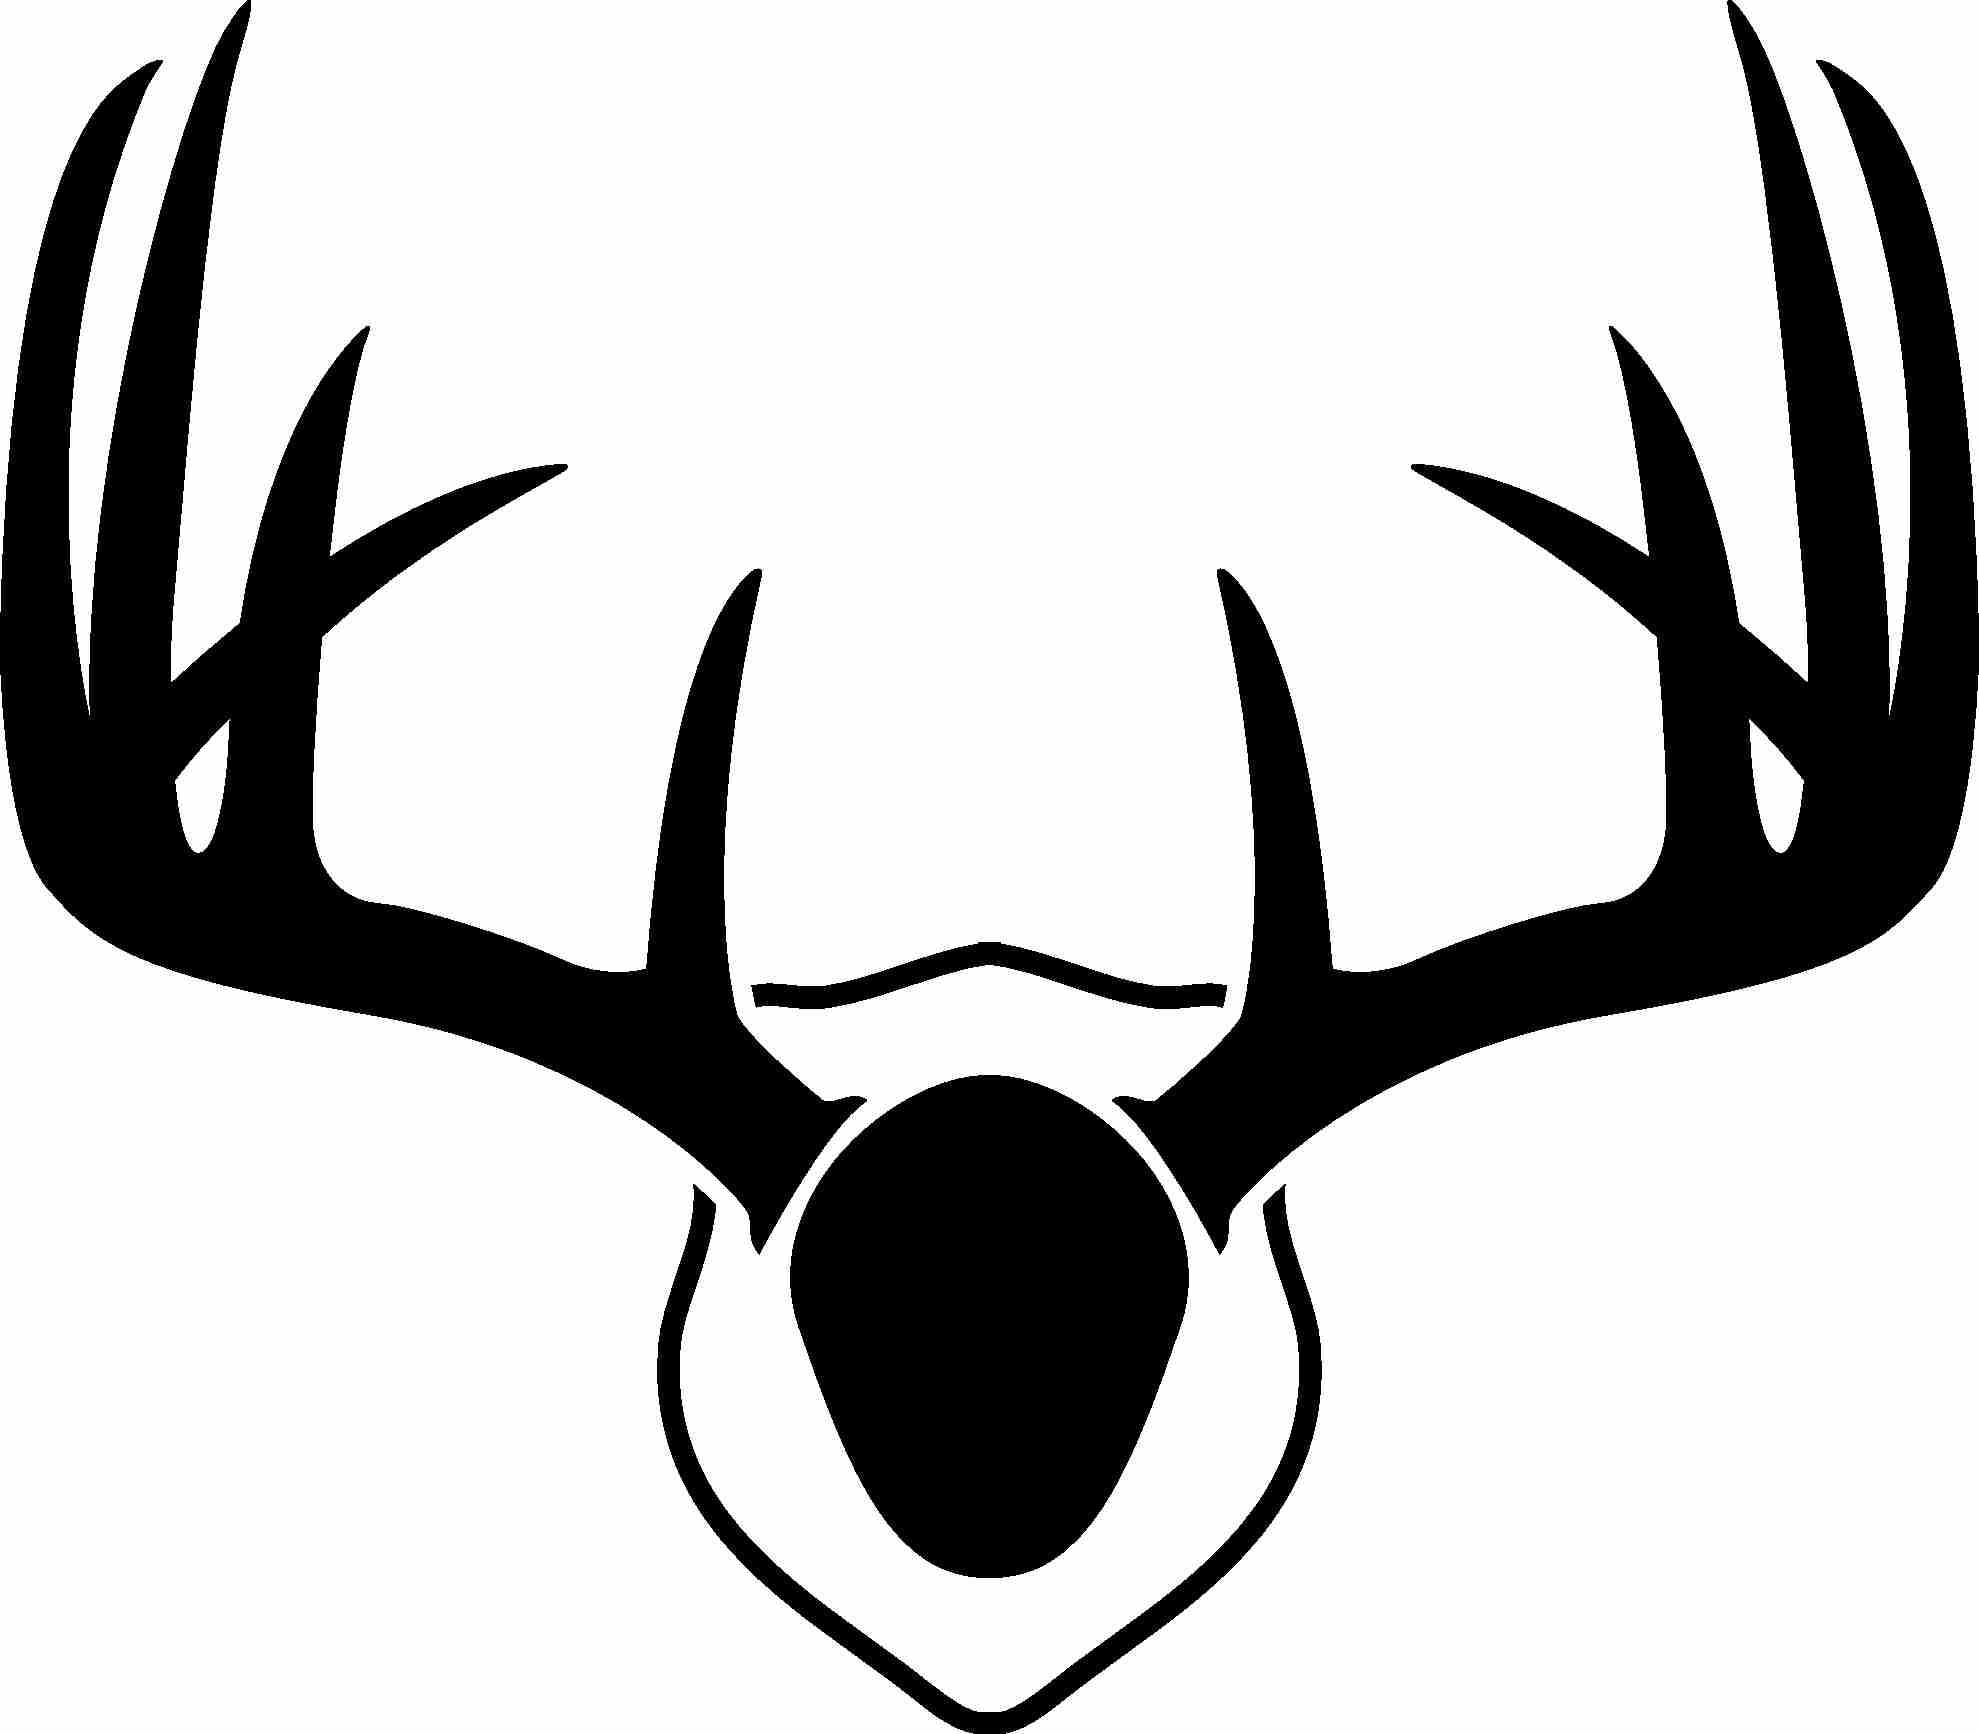 Download Deer Silhouette Svg At Getdrawings Free Download Yellowimages Mockups